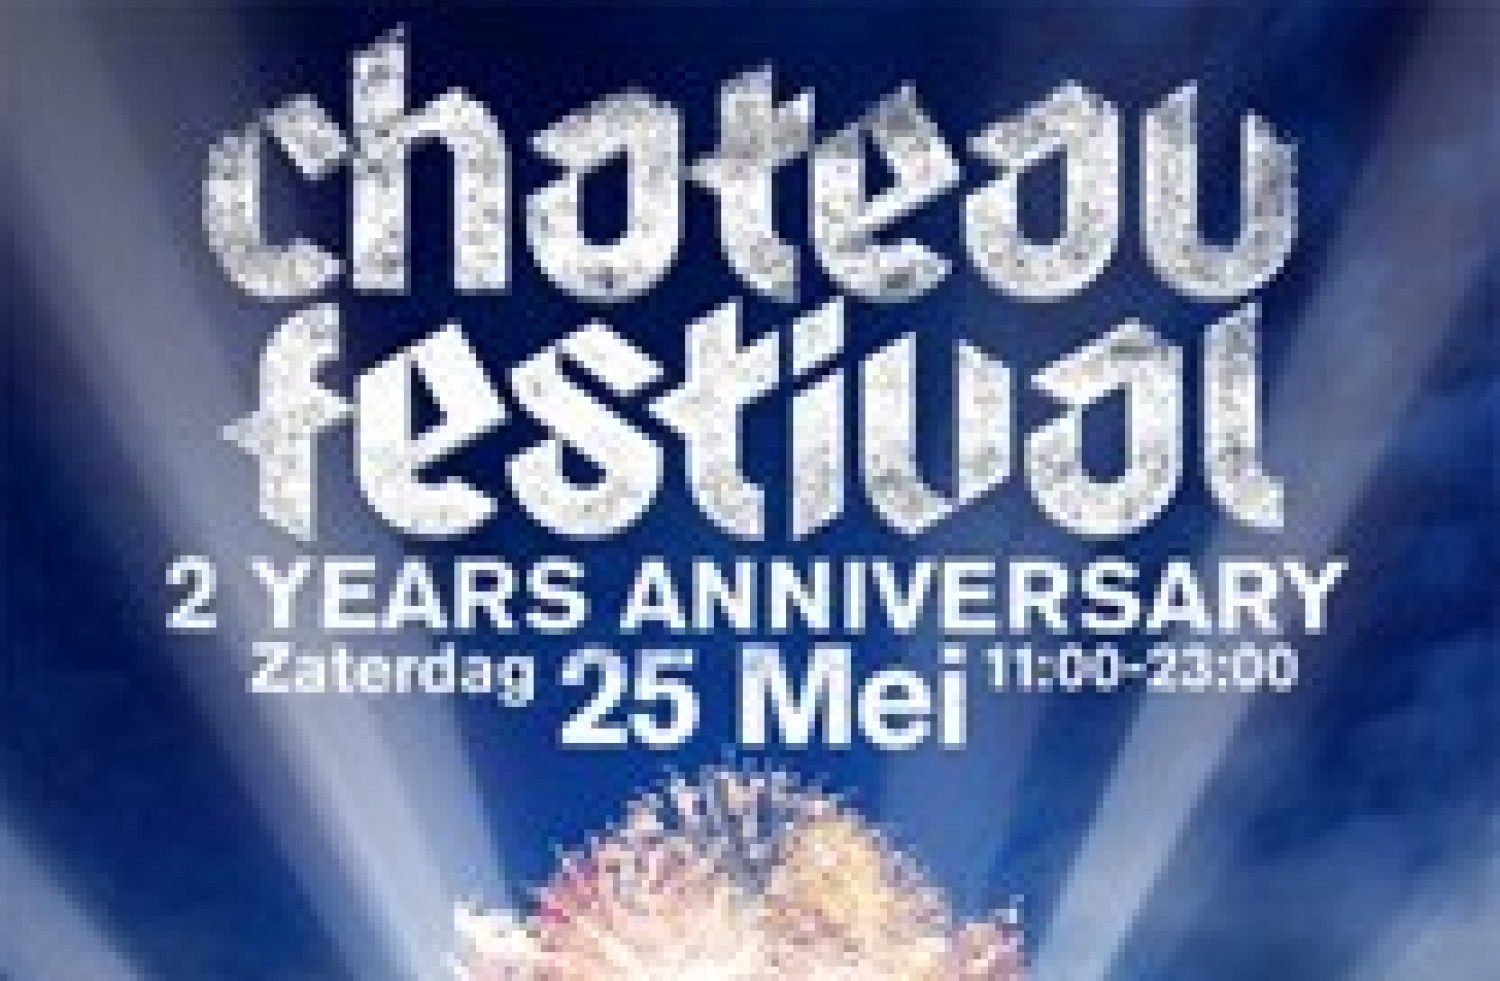 Party report: Chateau Festival, Haventerrein, 25 mei 2013